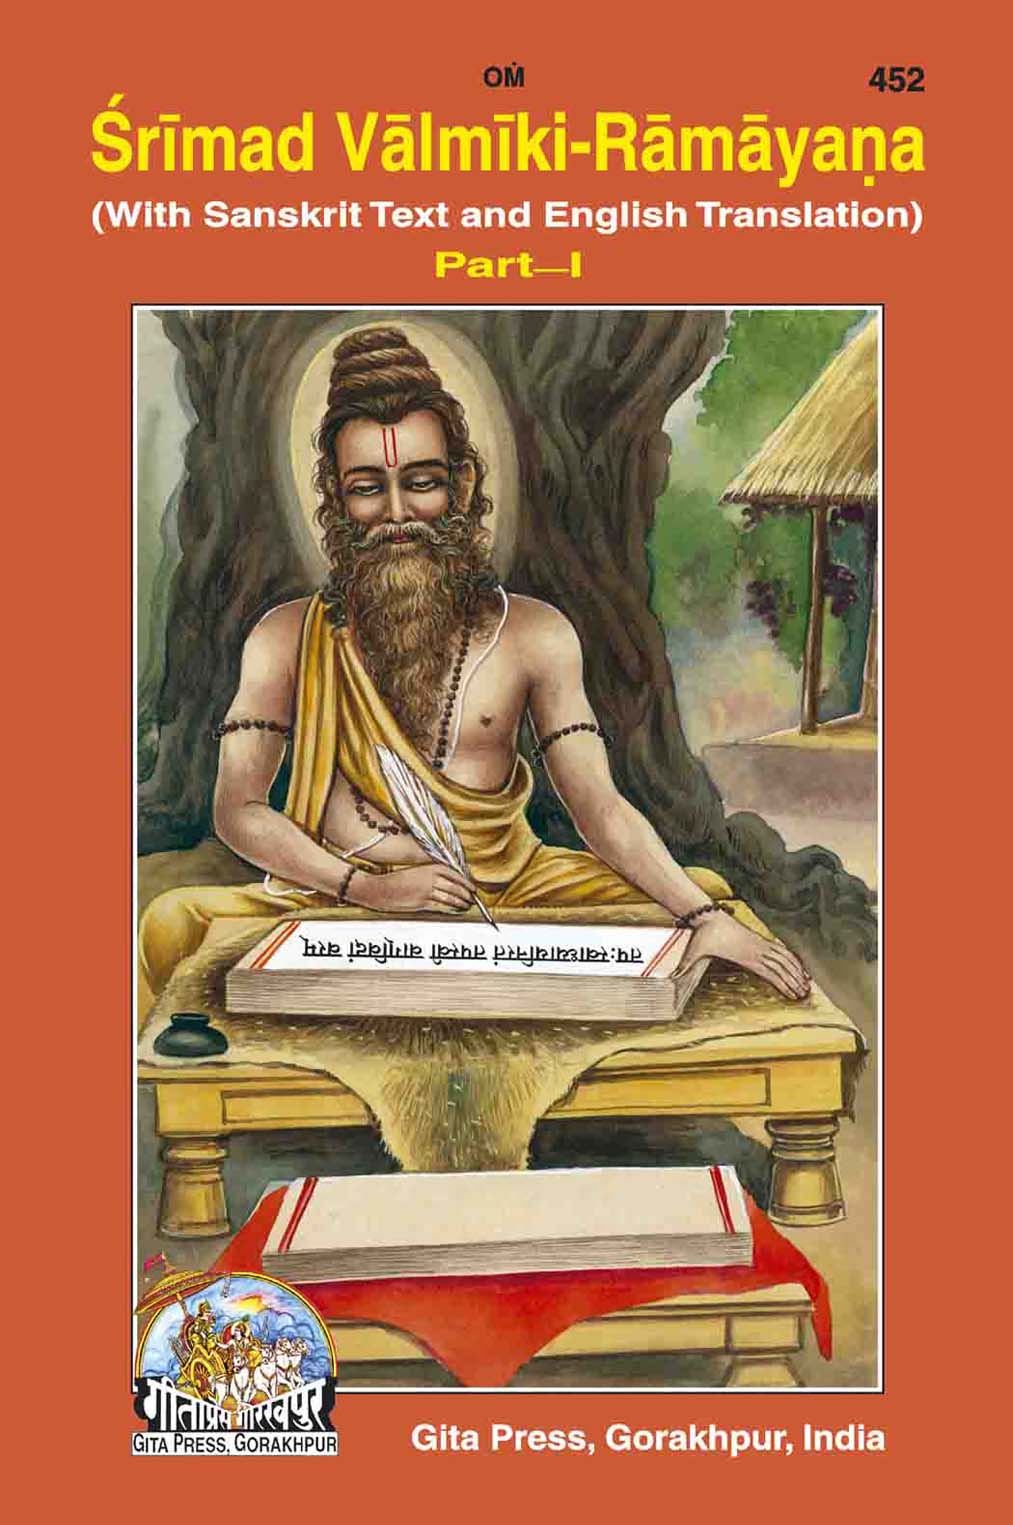 Srimad Valmiki Ramayana: Part-1 (English) by Gita Press